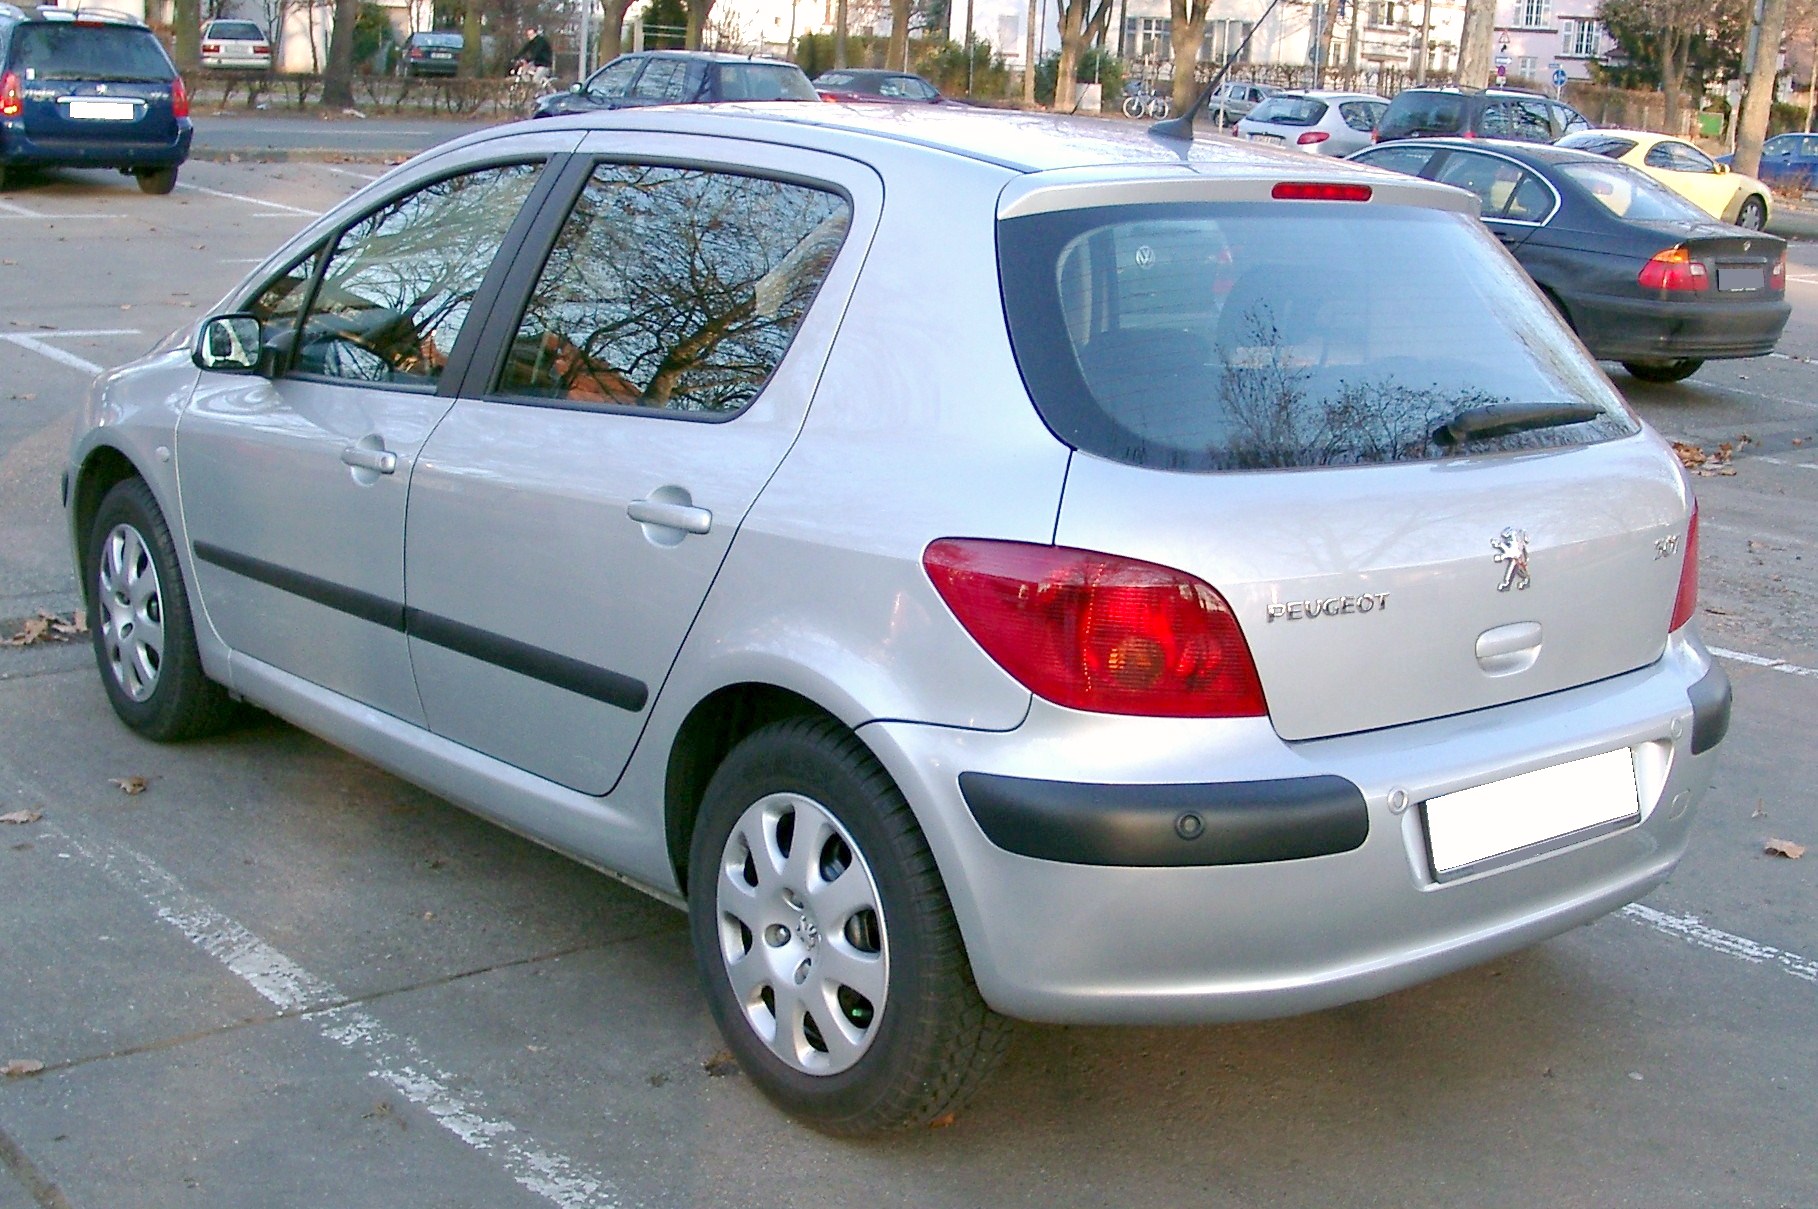 Peugeot 307 1.6 HDi 2007 [109HP] - POV Test Drive 